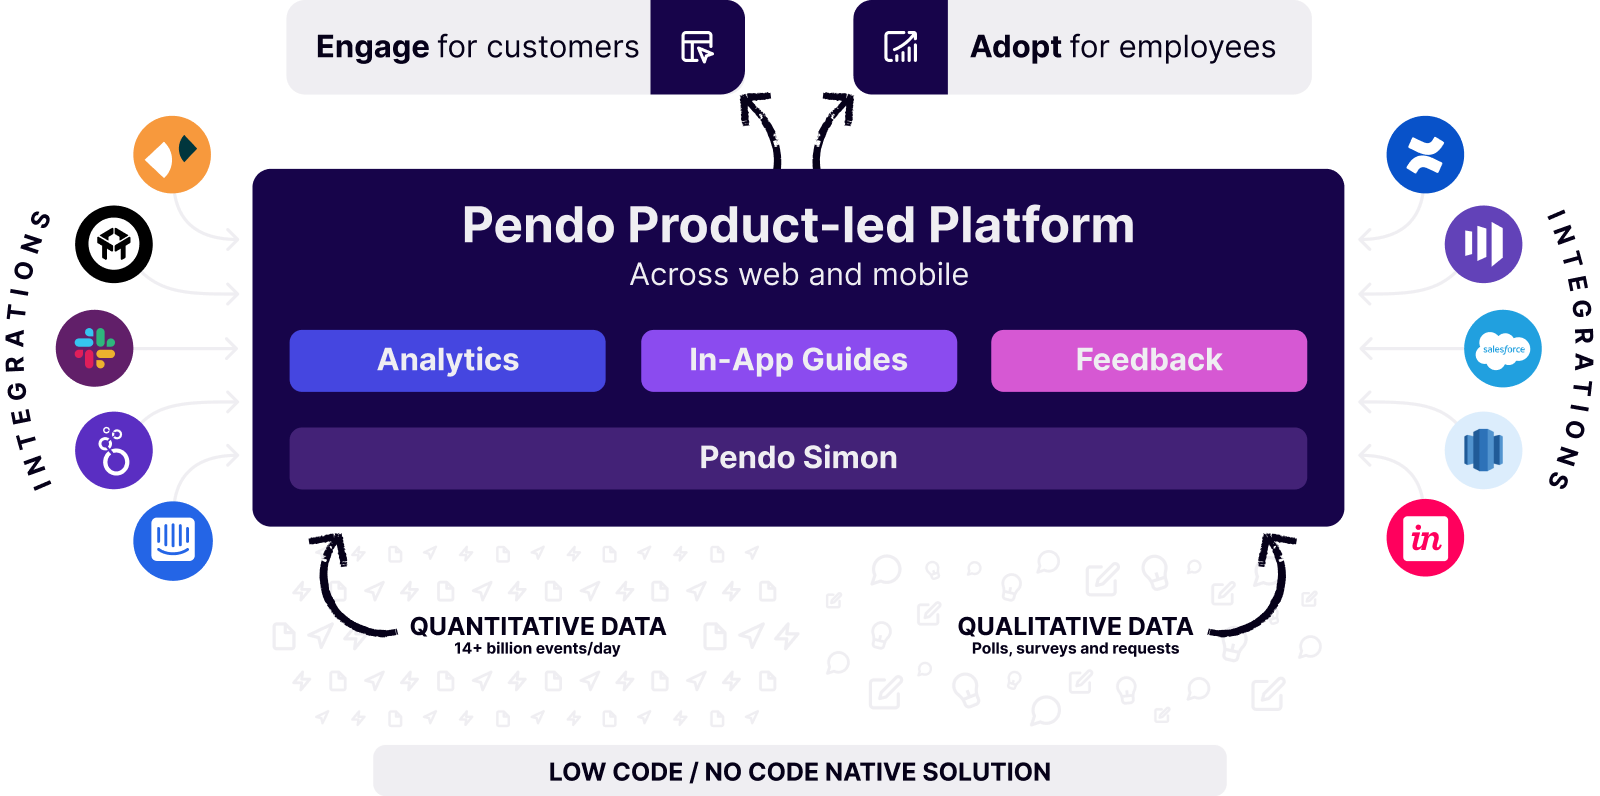 The Product-led Platform